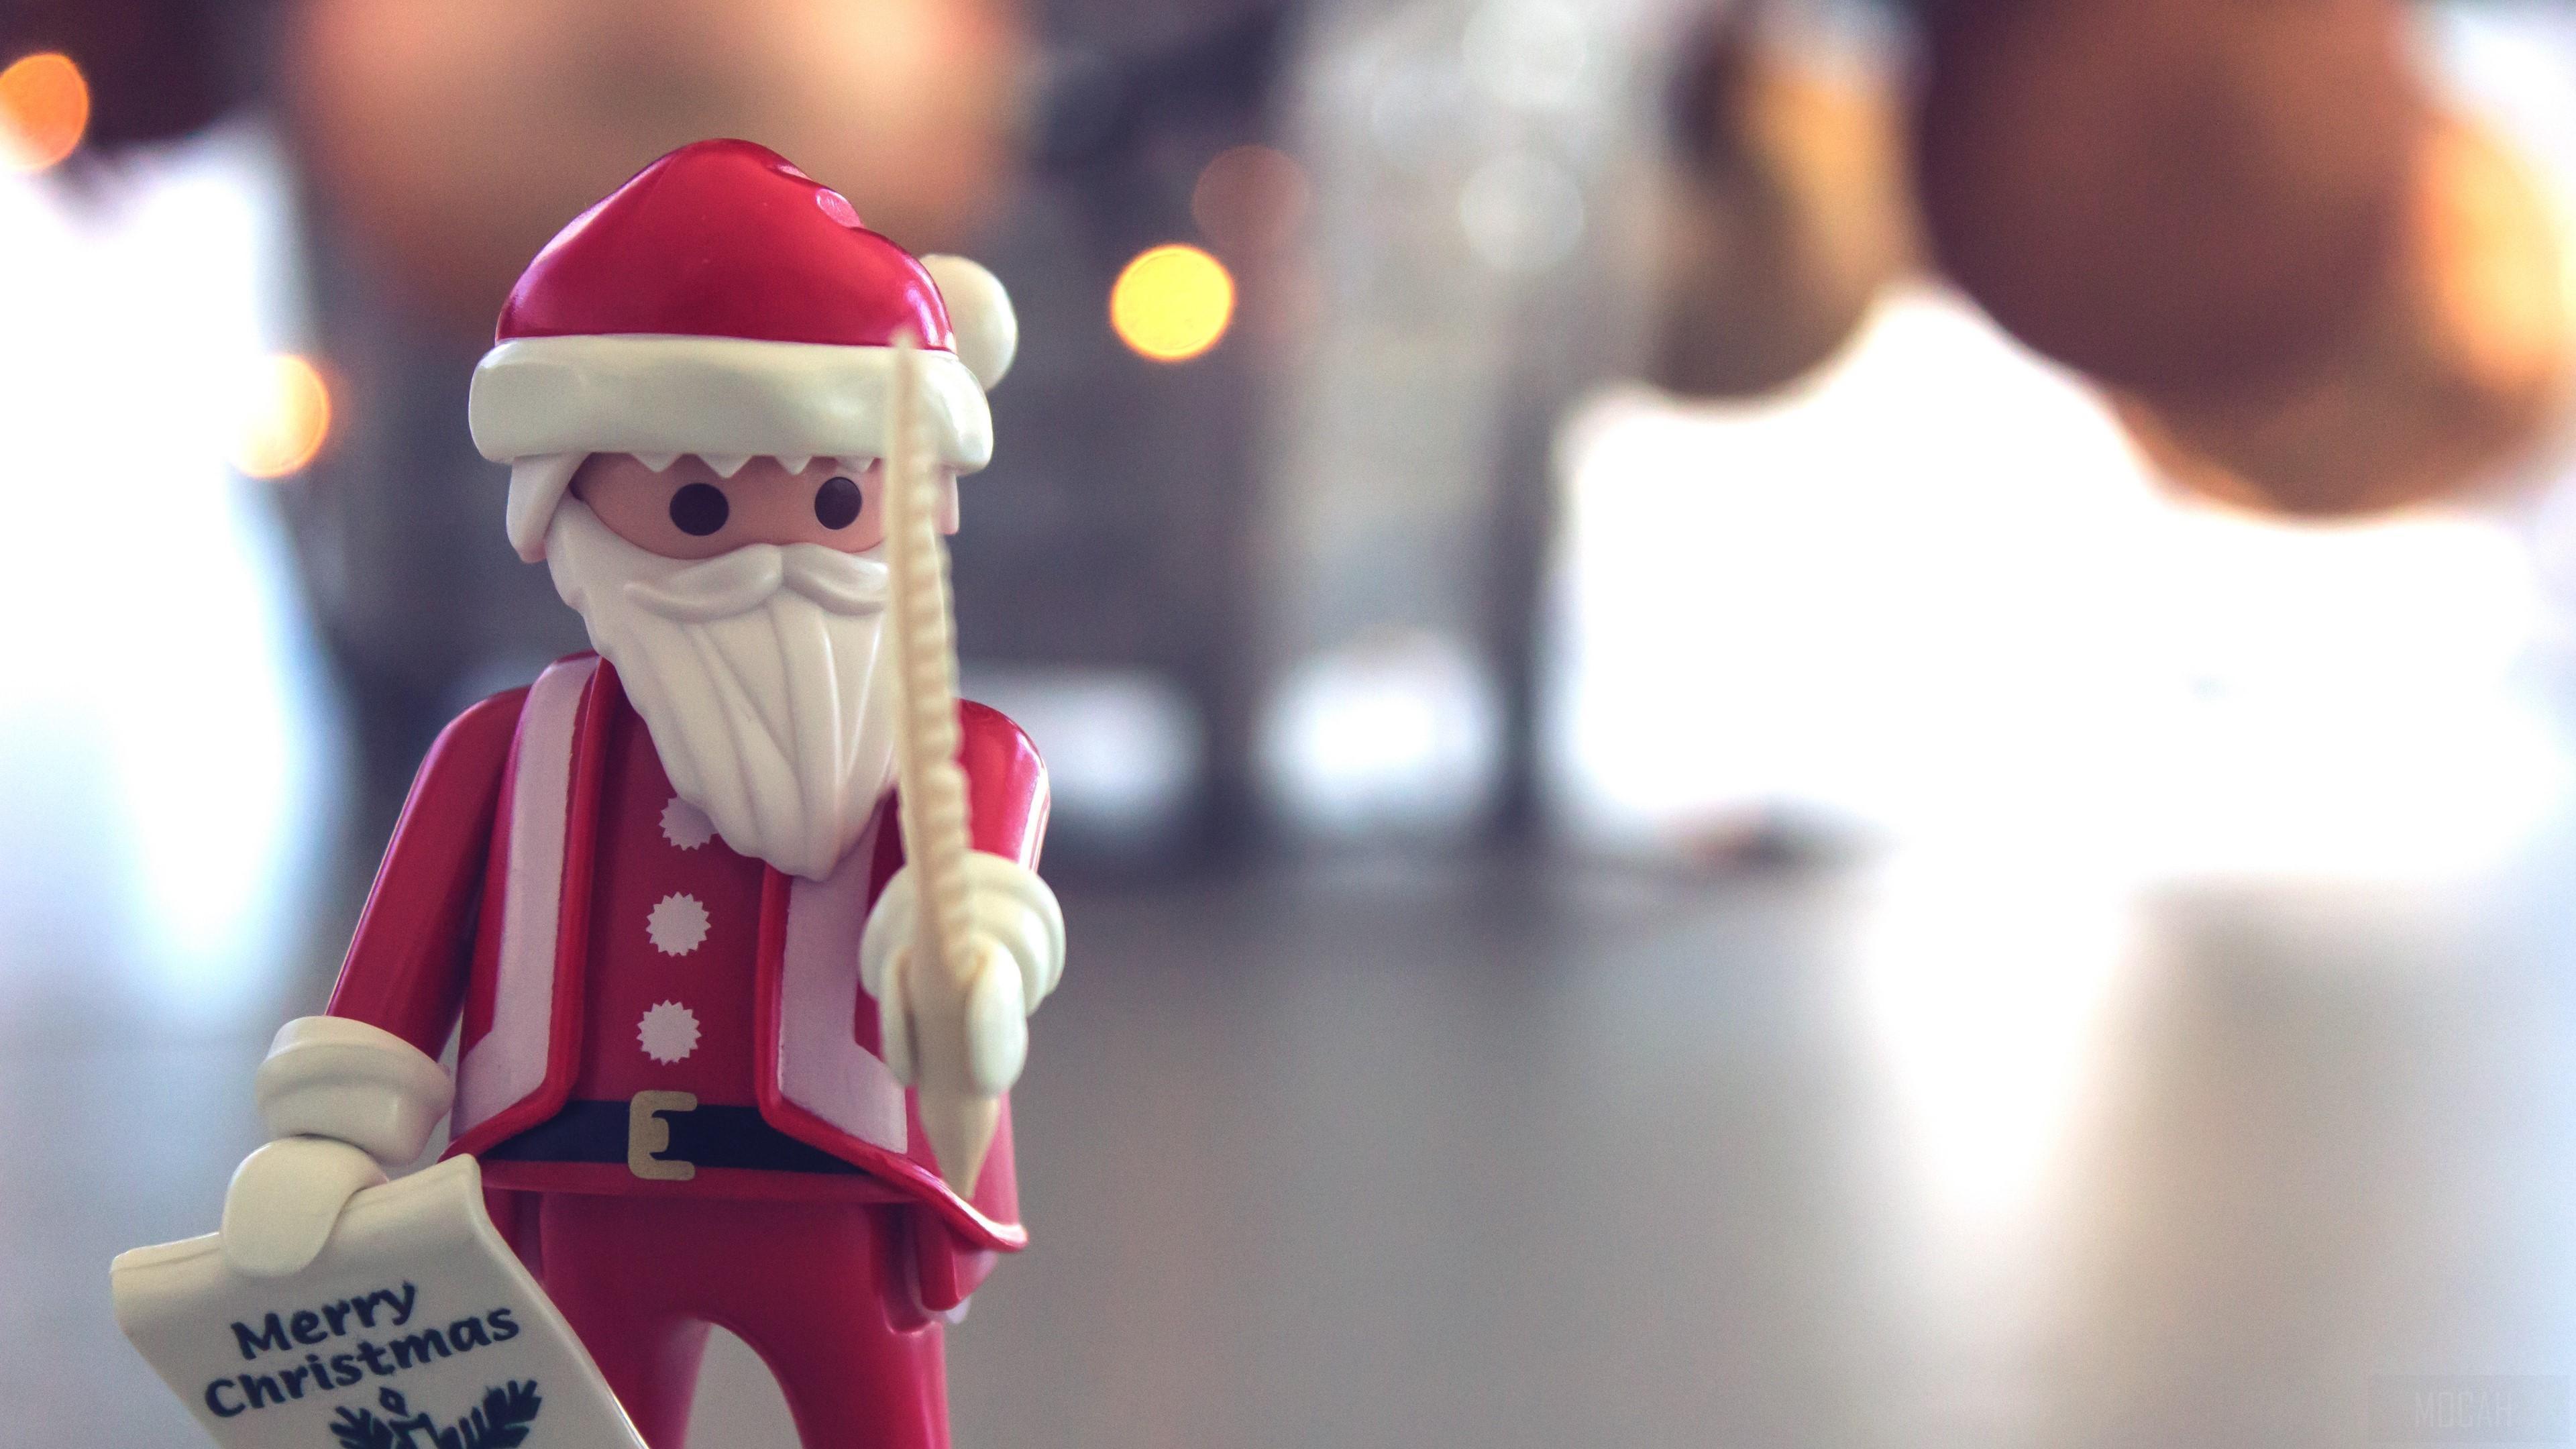 HD wallpaper, Toy, Glare 4K, Christmas, Santa Claus, Blur